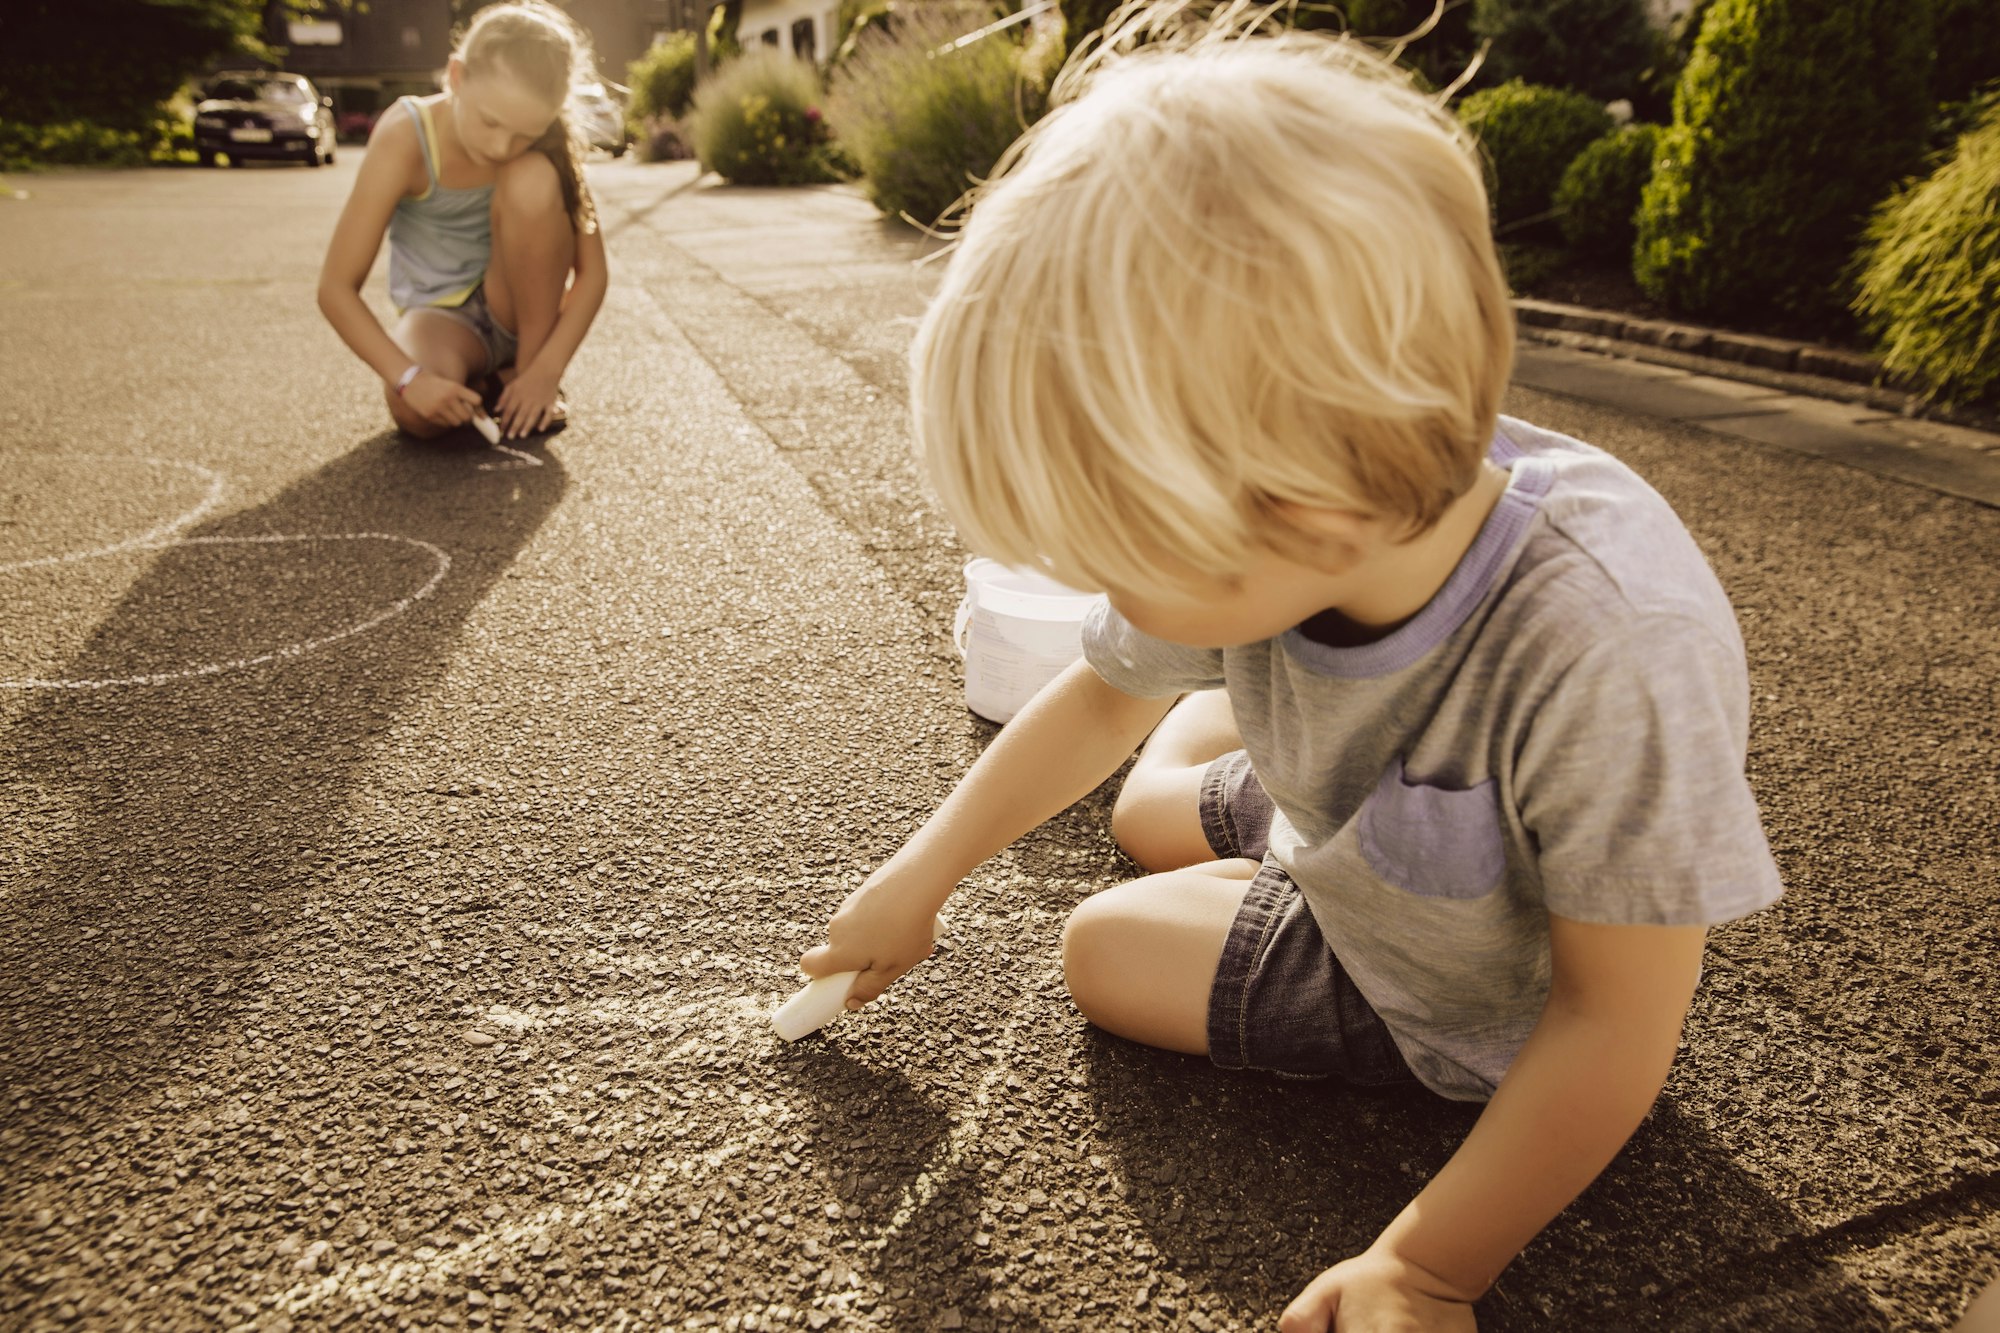 Children using sidewalk chalk in kid-friendly neighborhood